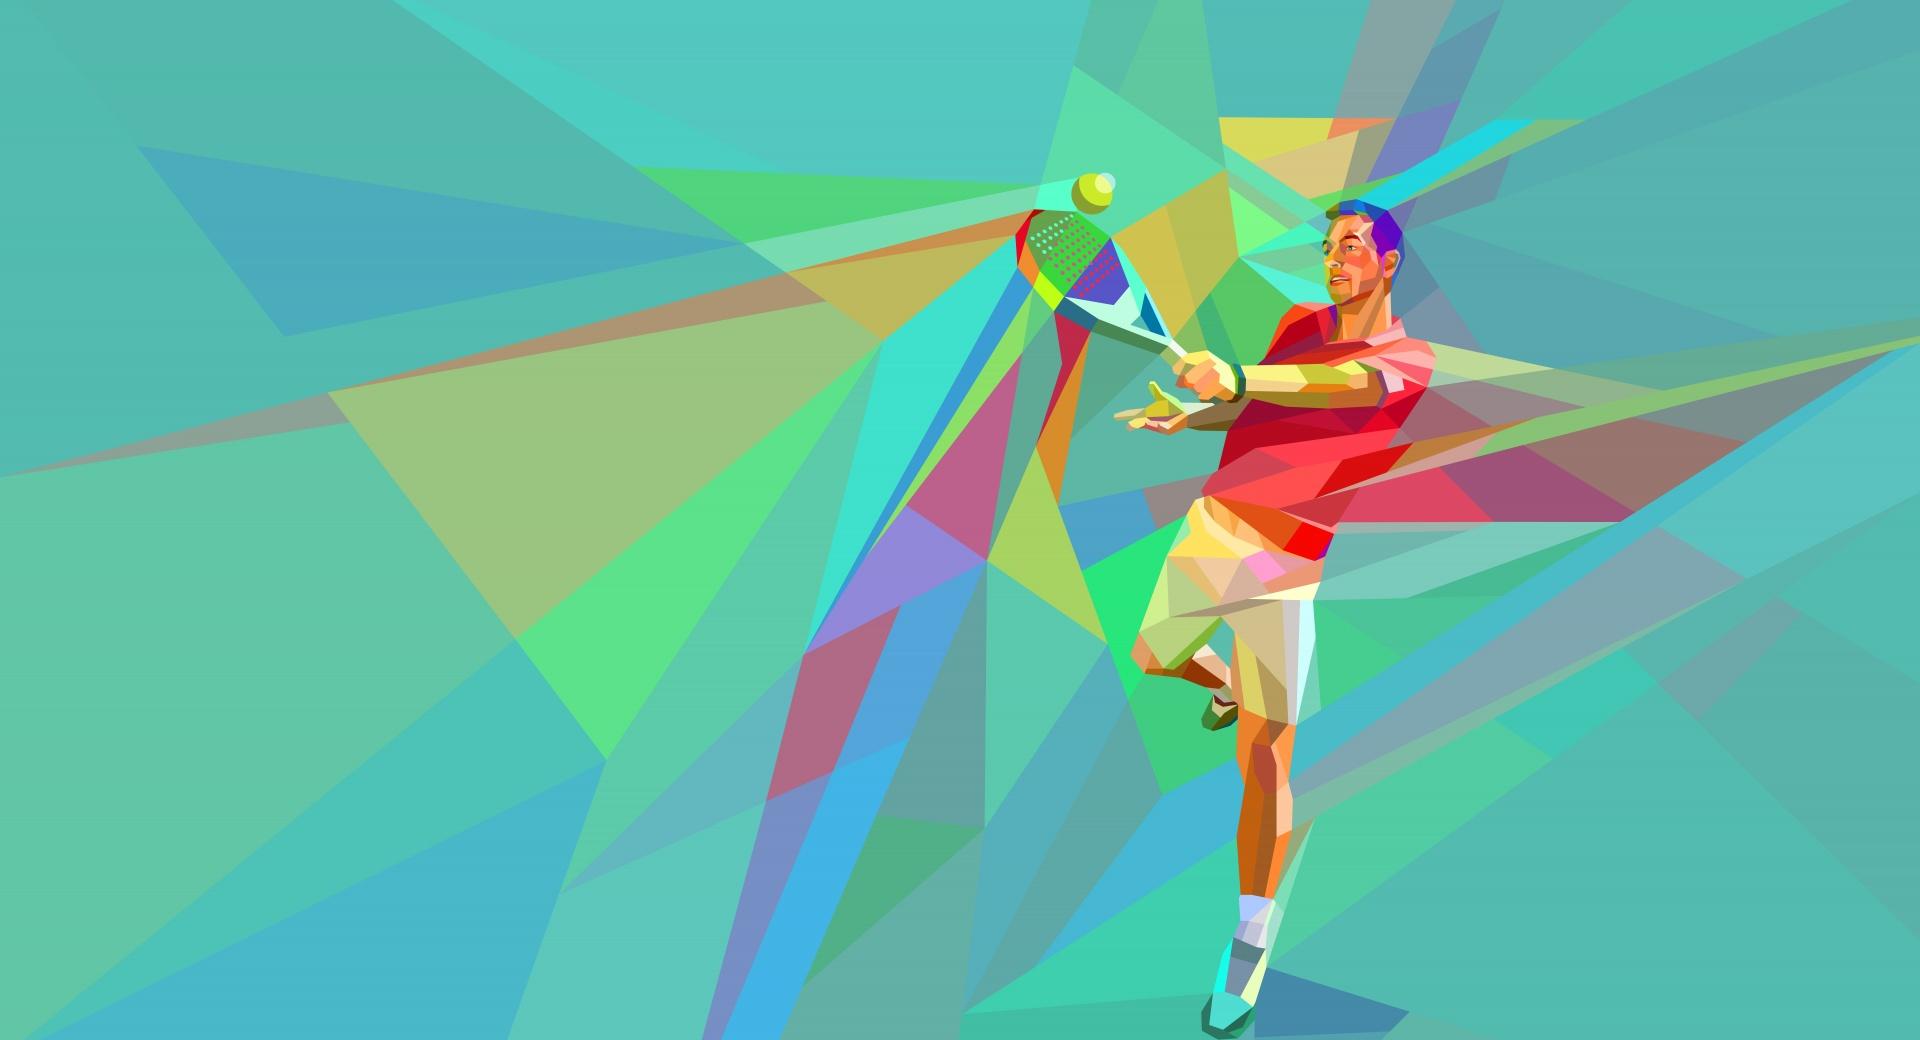 World Championship Tennis at 1024 x 1024 iPad size wallpapers HD quality